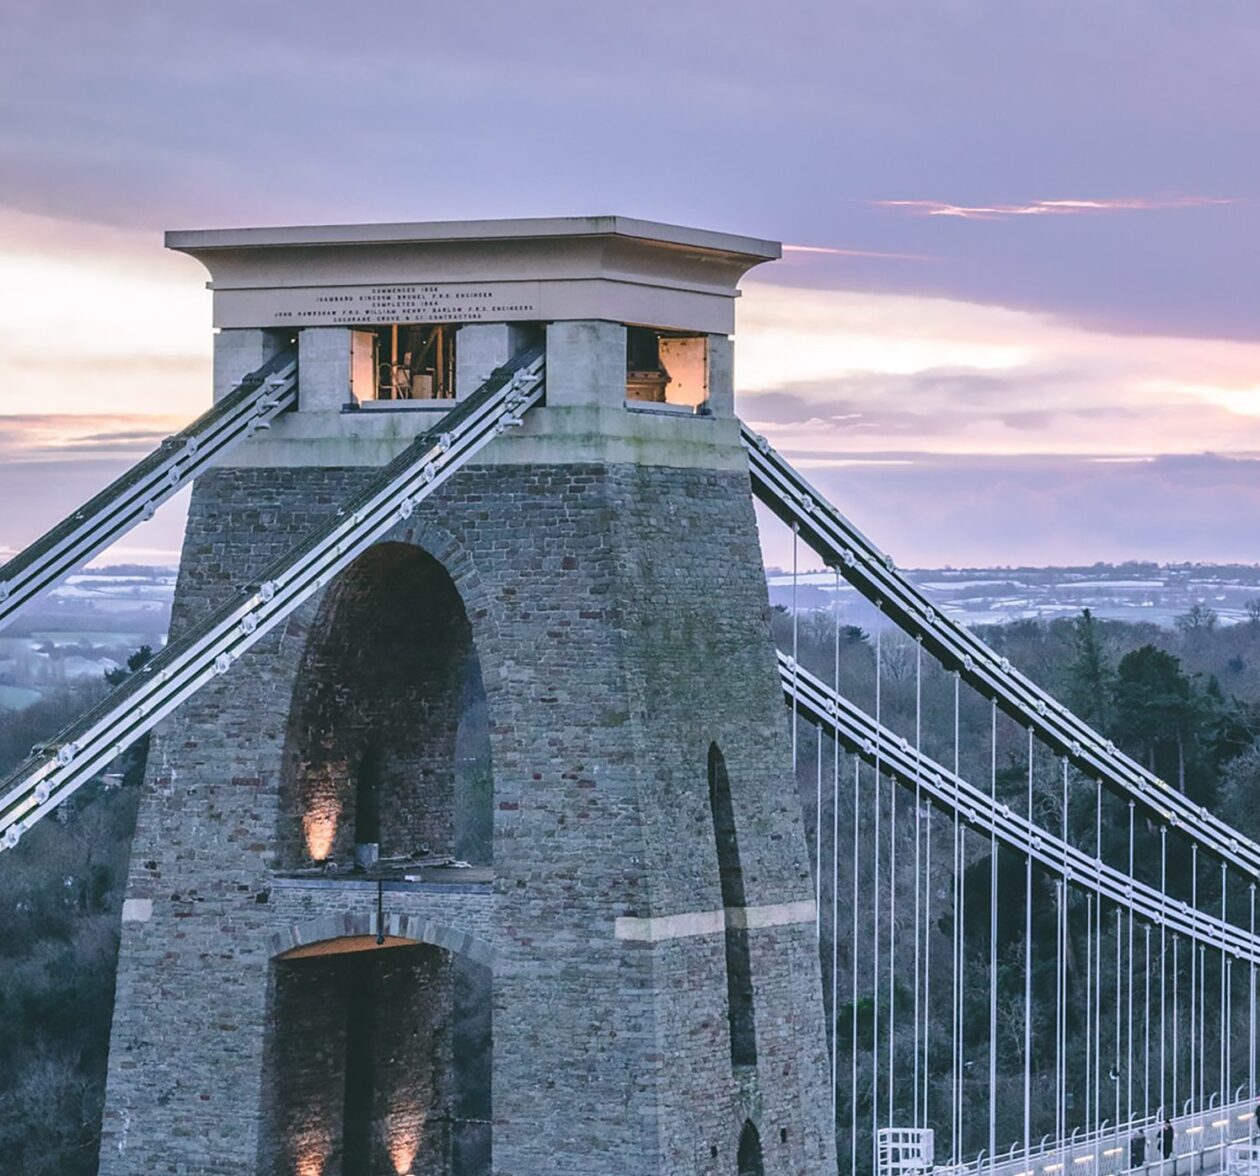 New digital era for iconic Bristol landmark